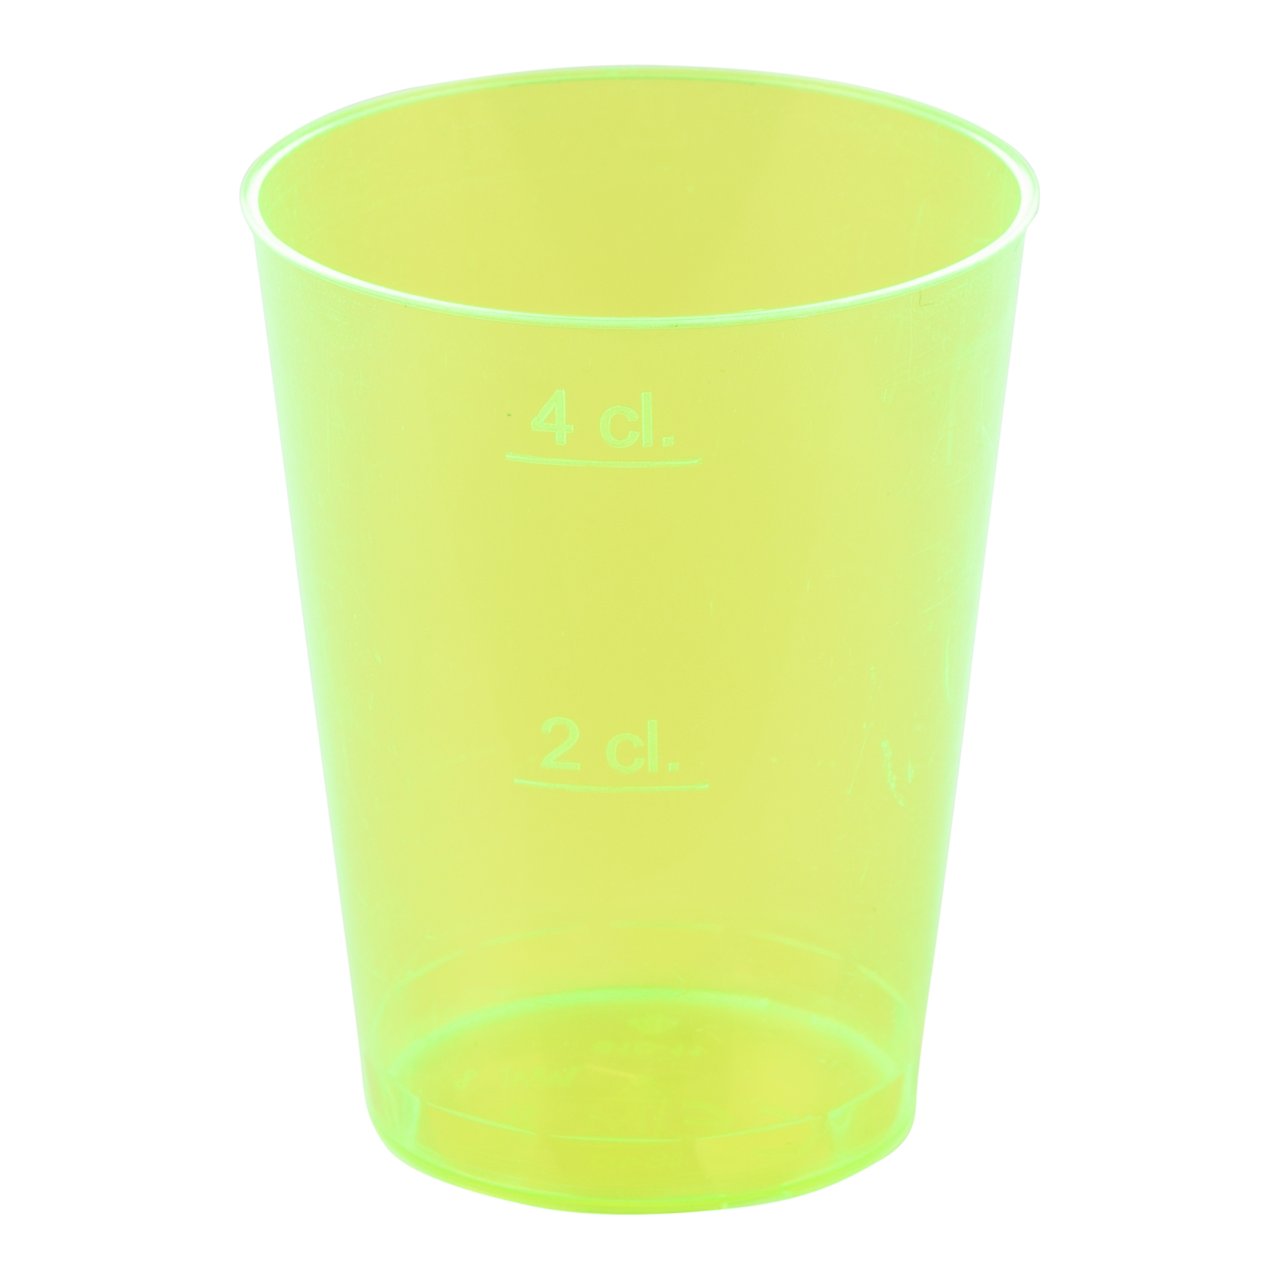 Shotglas 40/20 ml, geel